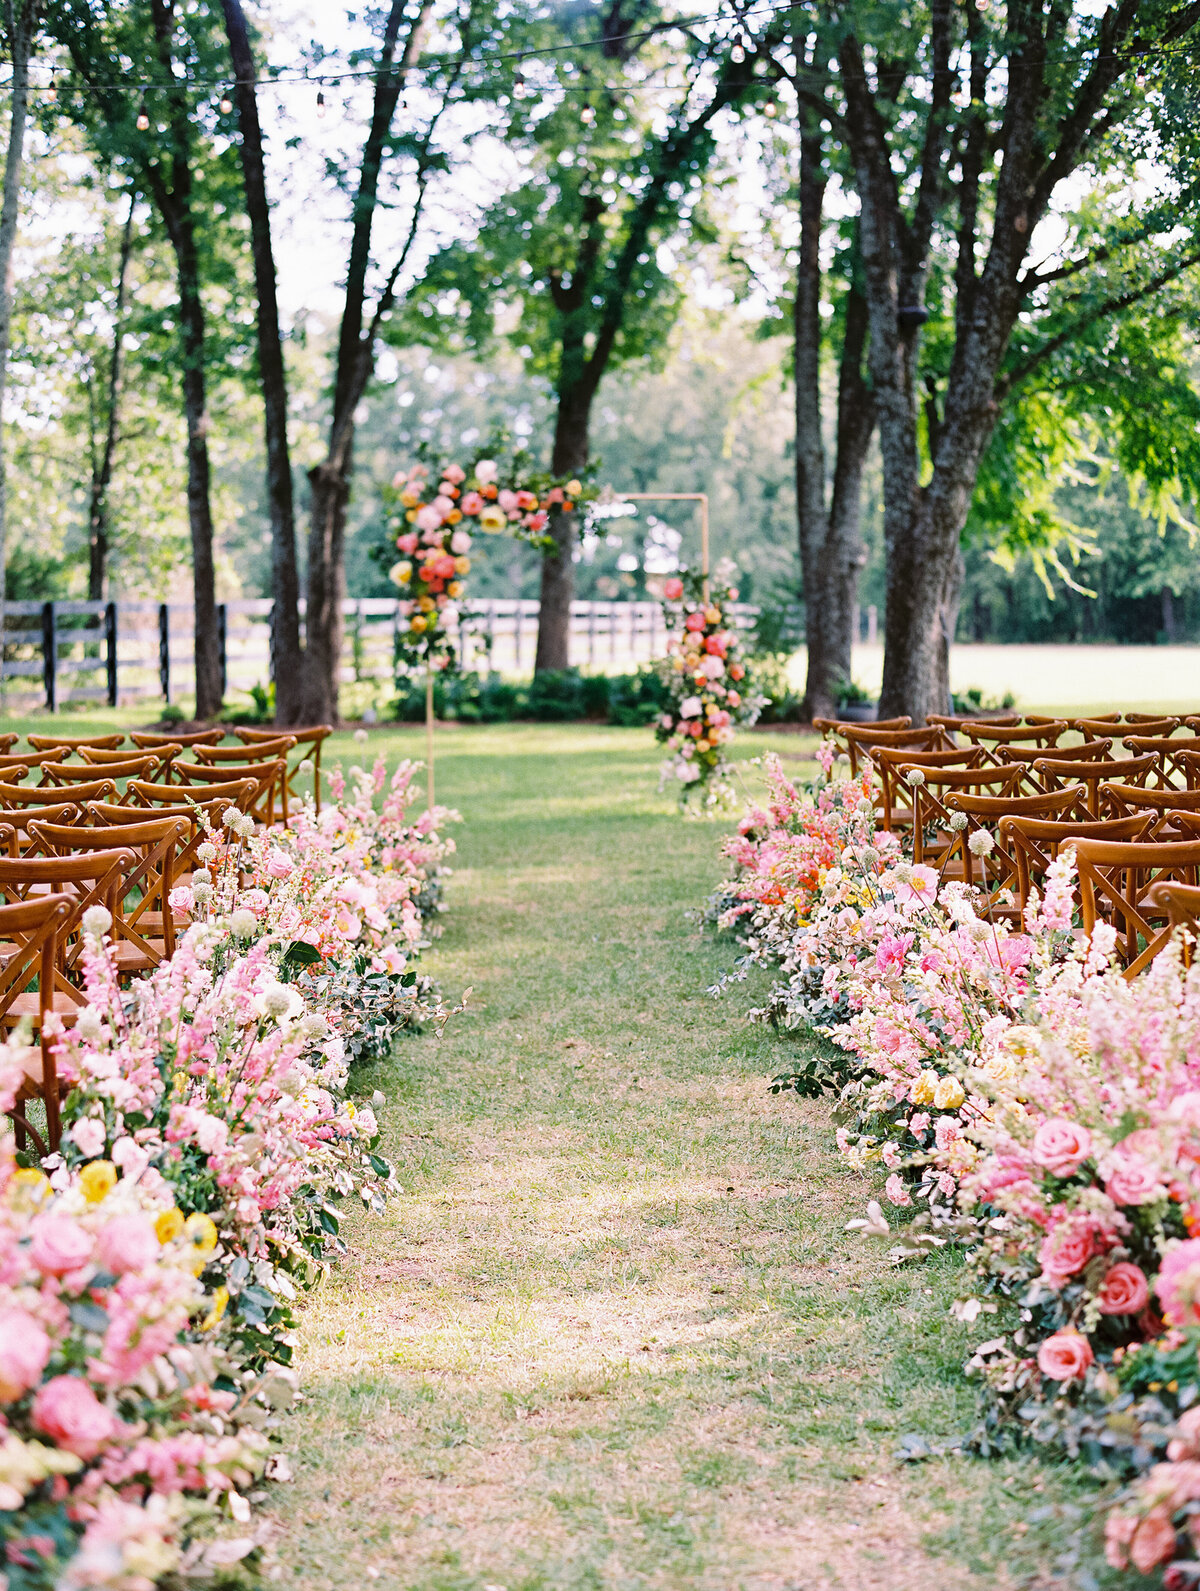 max-owens-design-bright-summer-wedding-07-ceremony-aisle